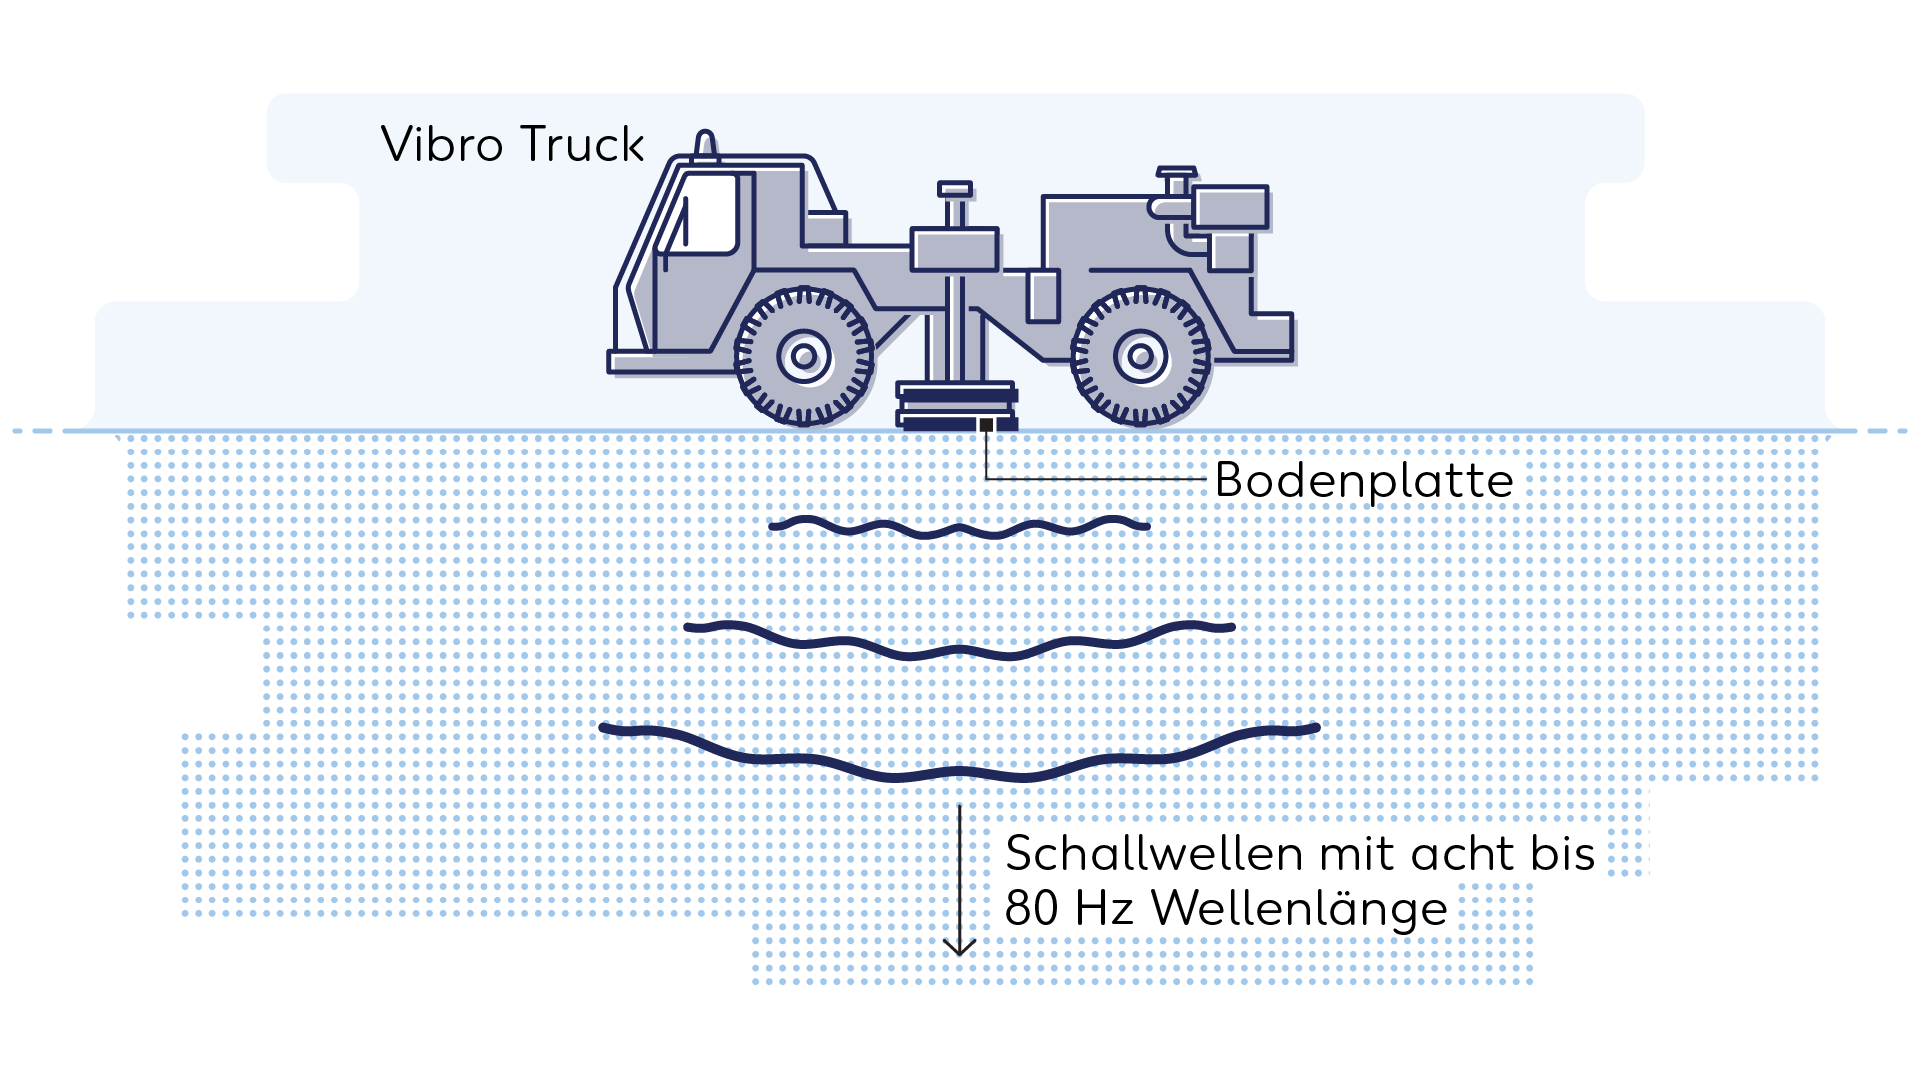 Wintershall Dea Grafik Vibro Truck Schallwellen